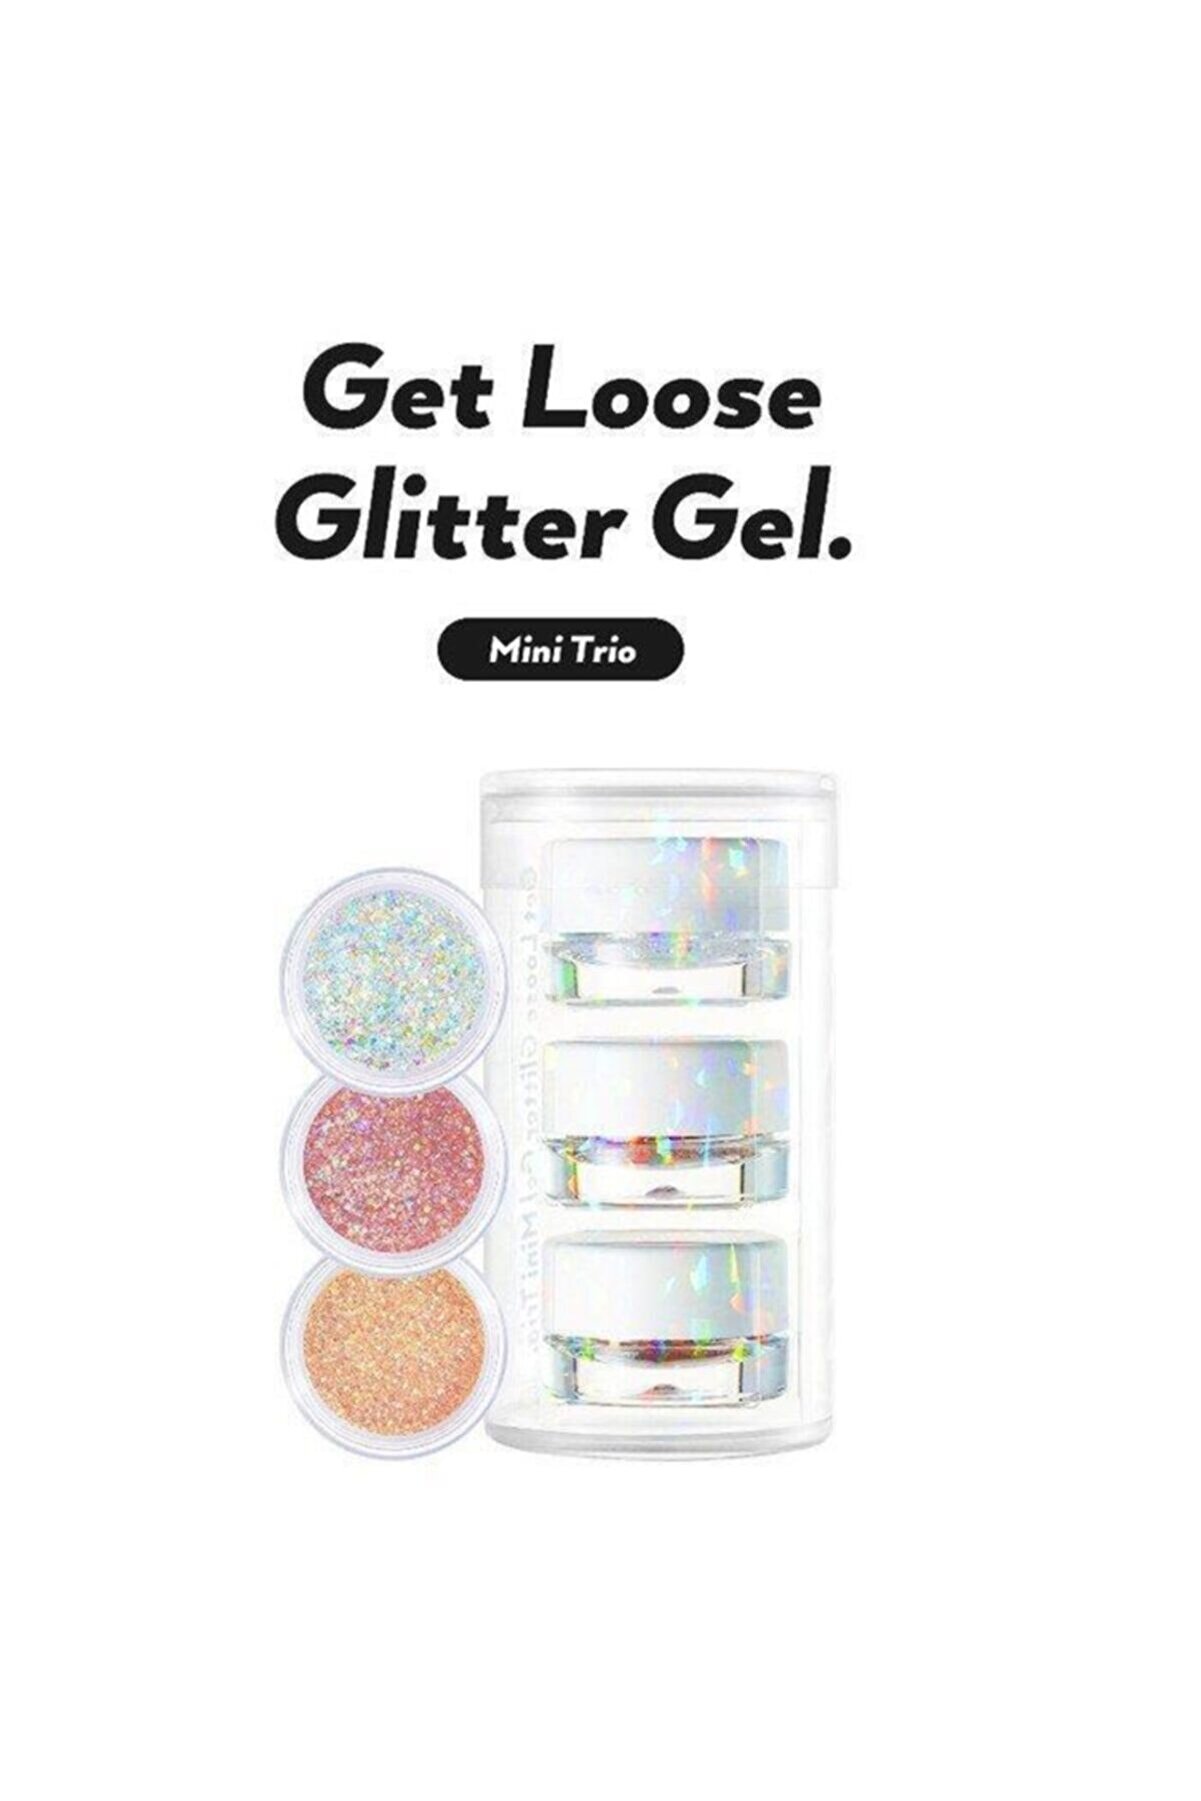 UNLEASHIA Unleashıa - Get Loose Glitter Gel Mini Trio Set